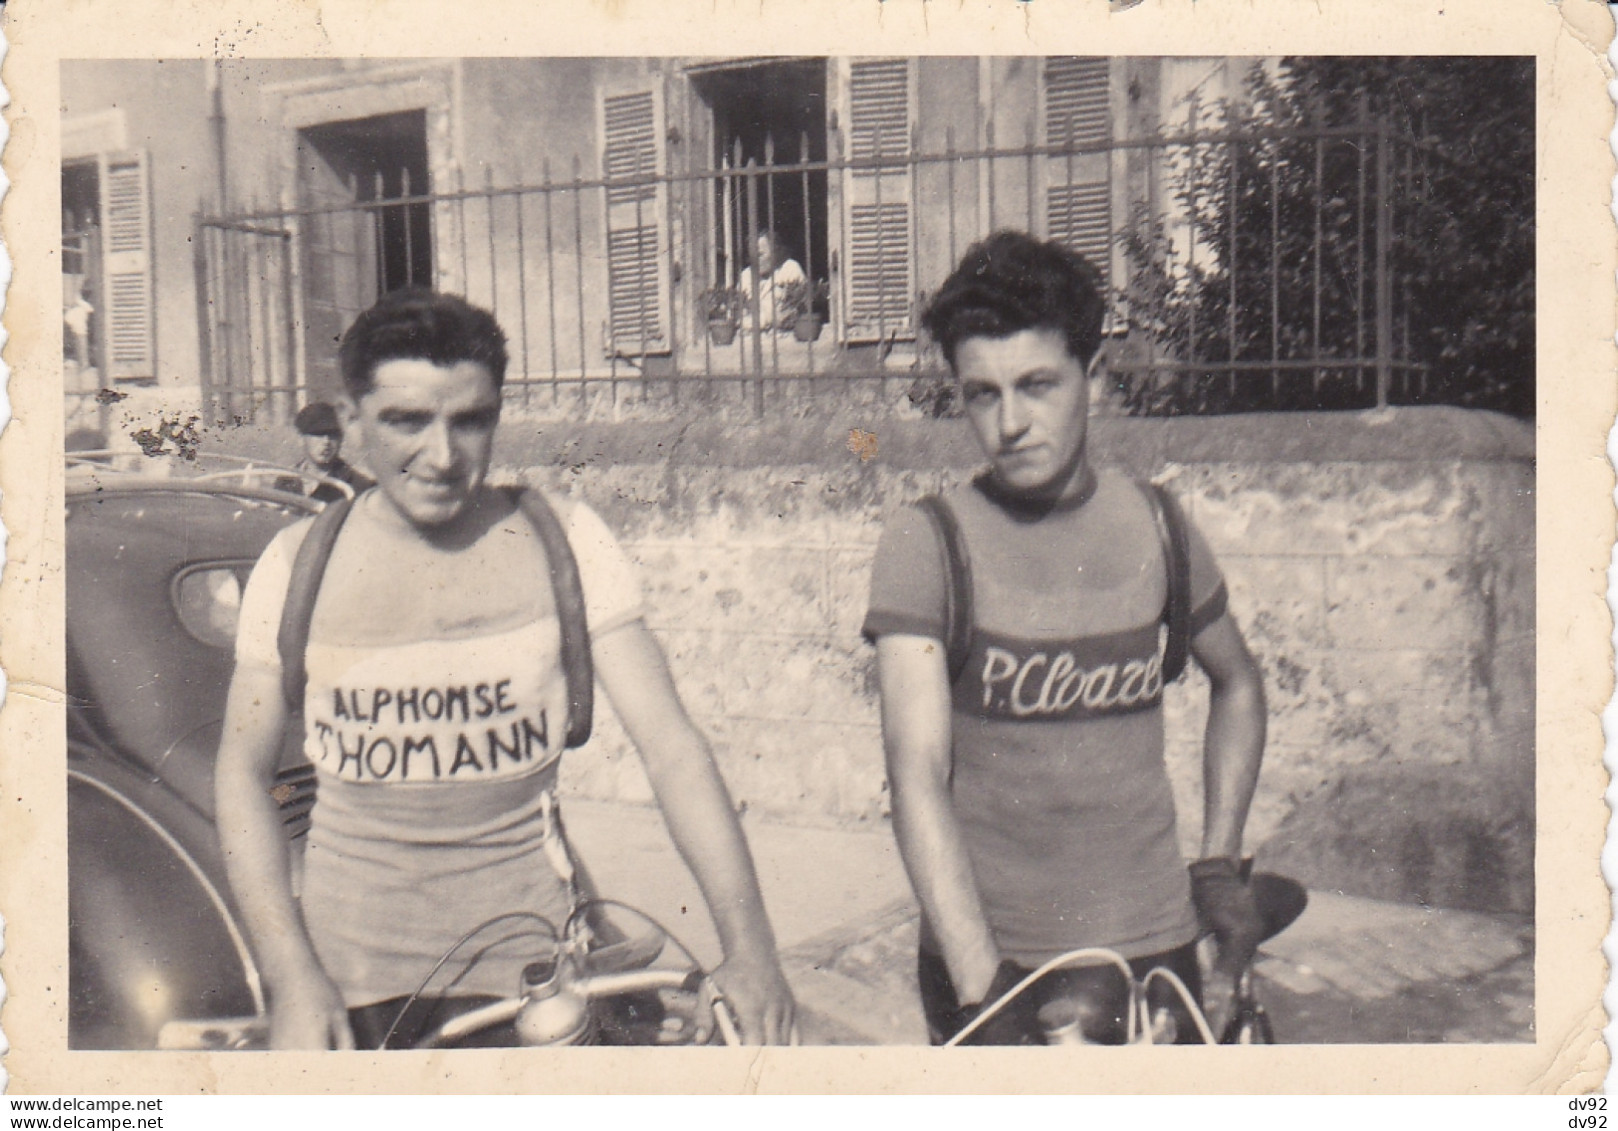 FINISTERE LEMBEZELLEC CYCLISTES 1951 - Wielrennen